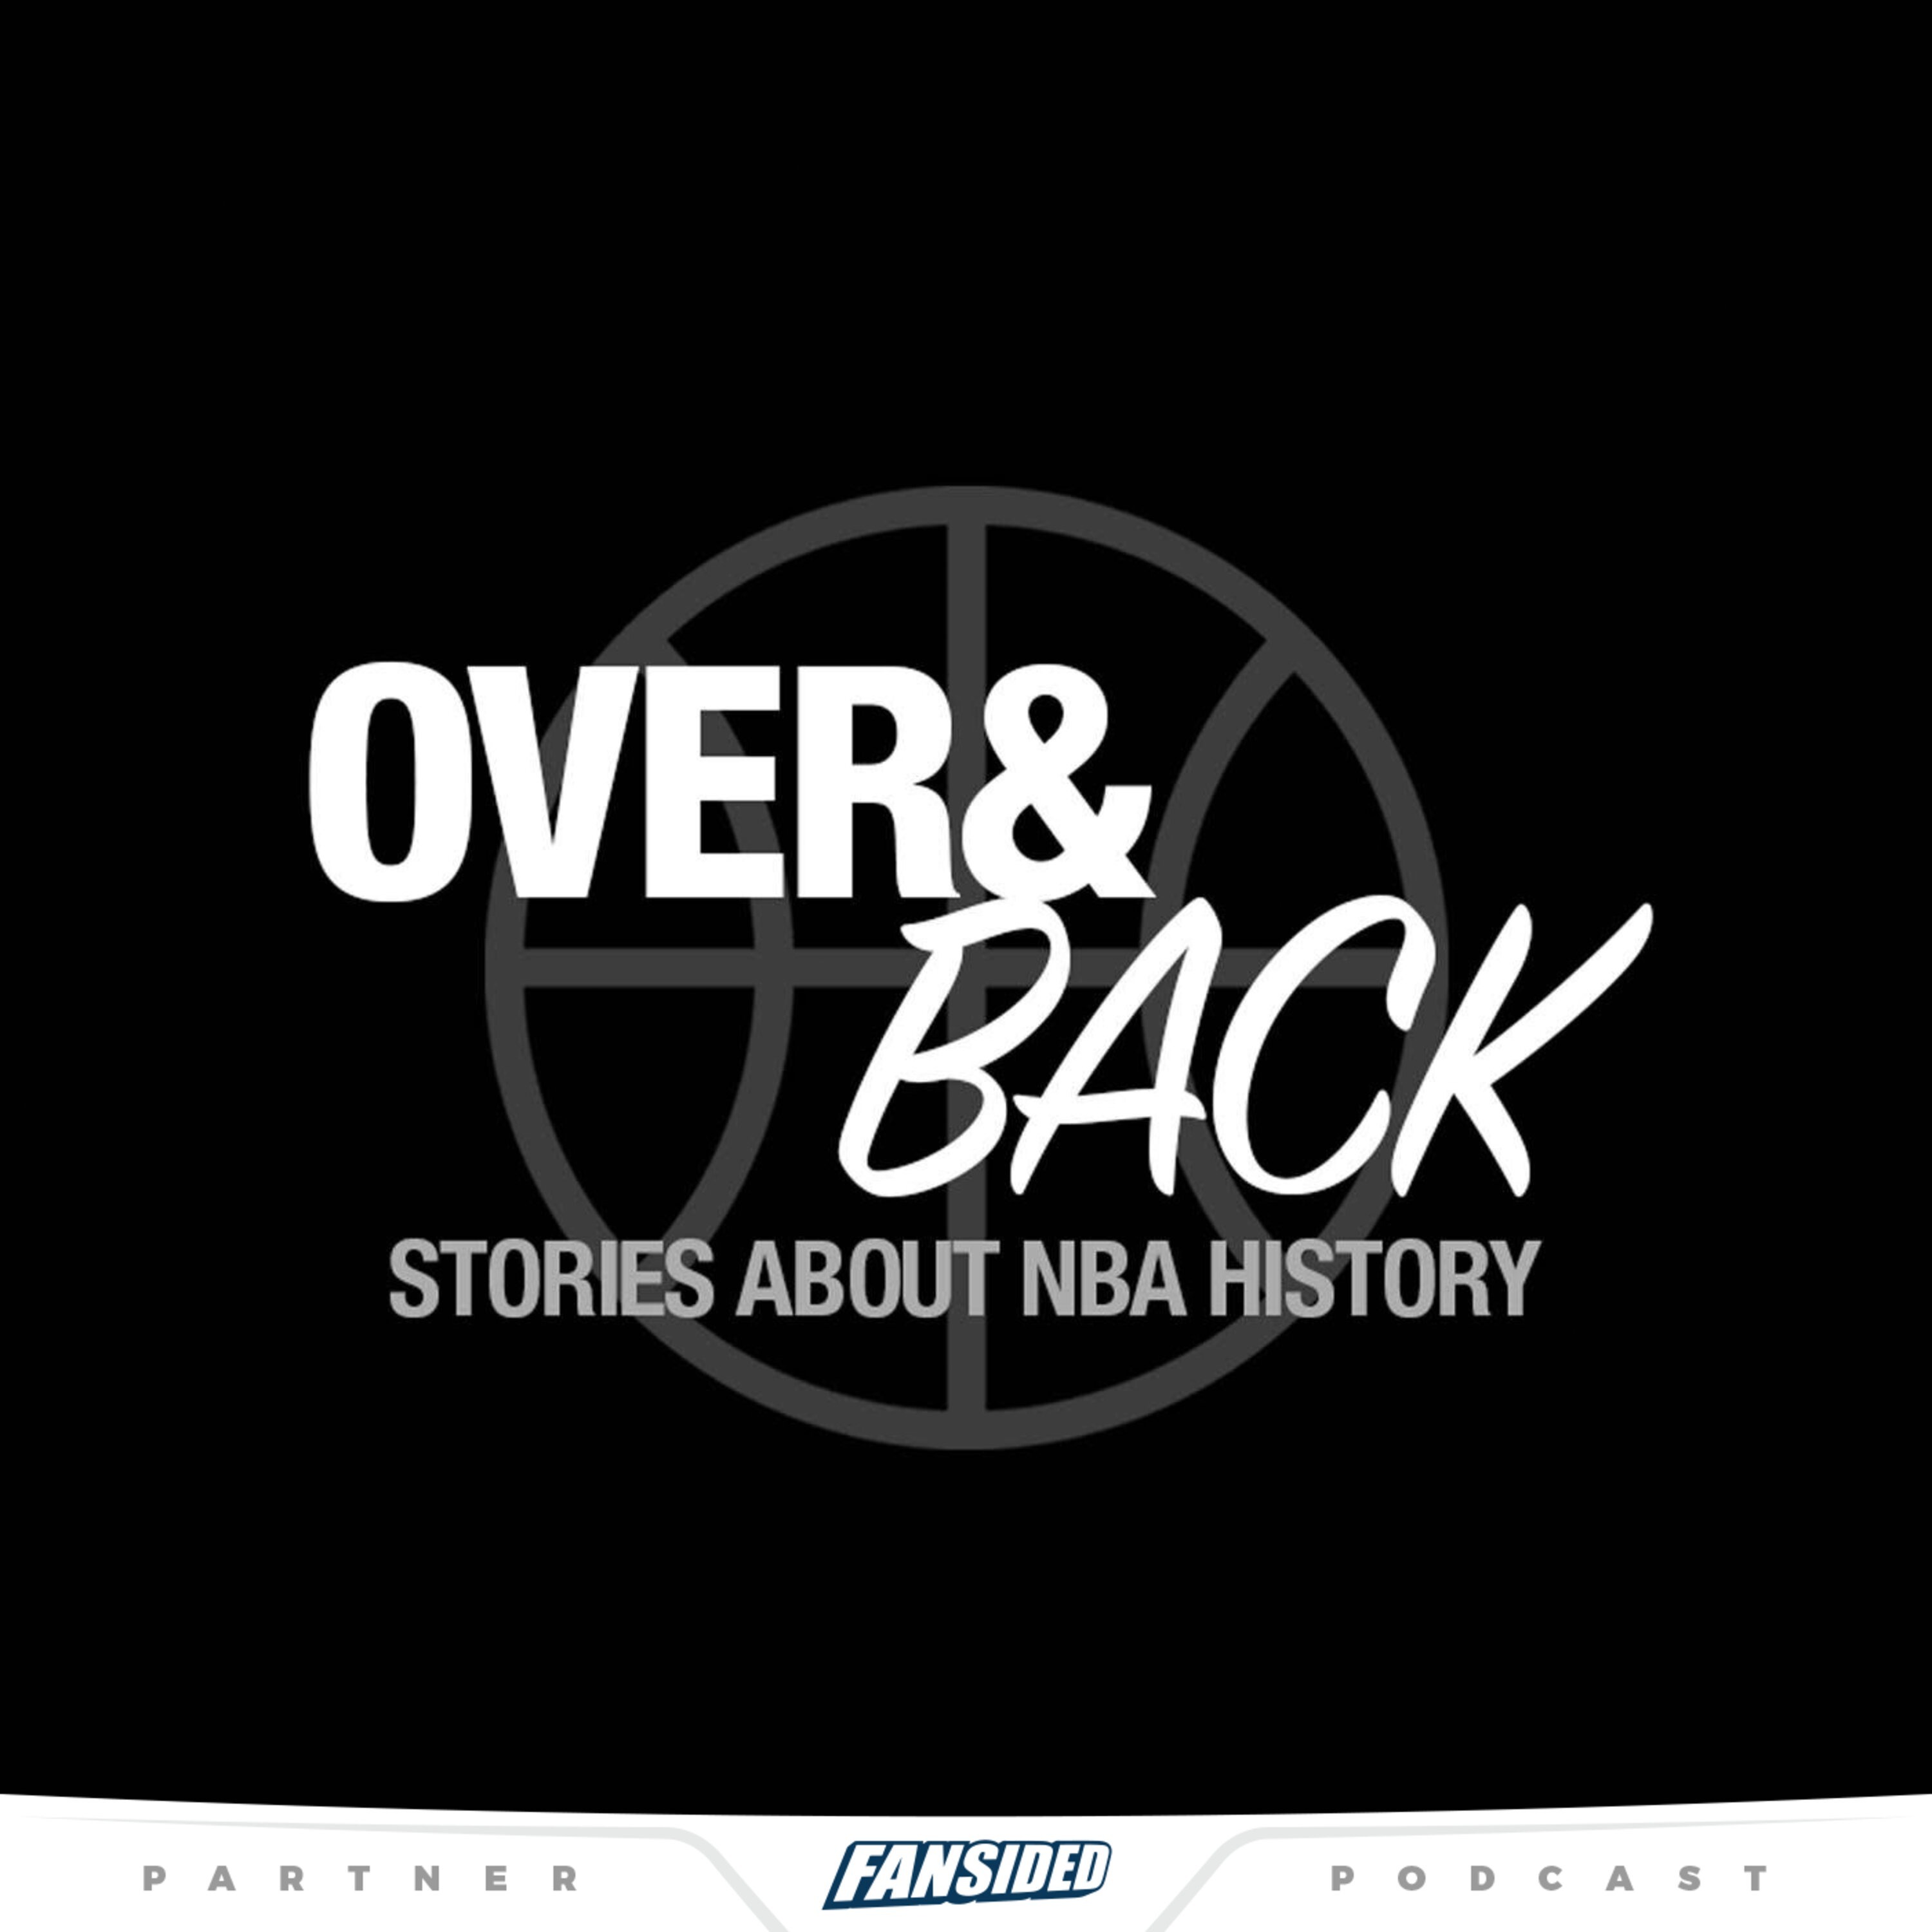 Top Moments: Routine pass ushers John Stockton into NBA's history